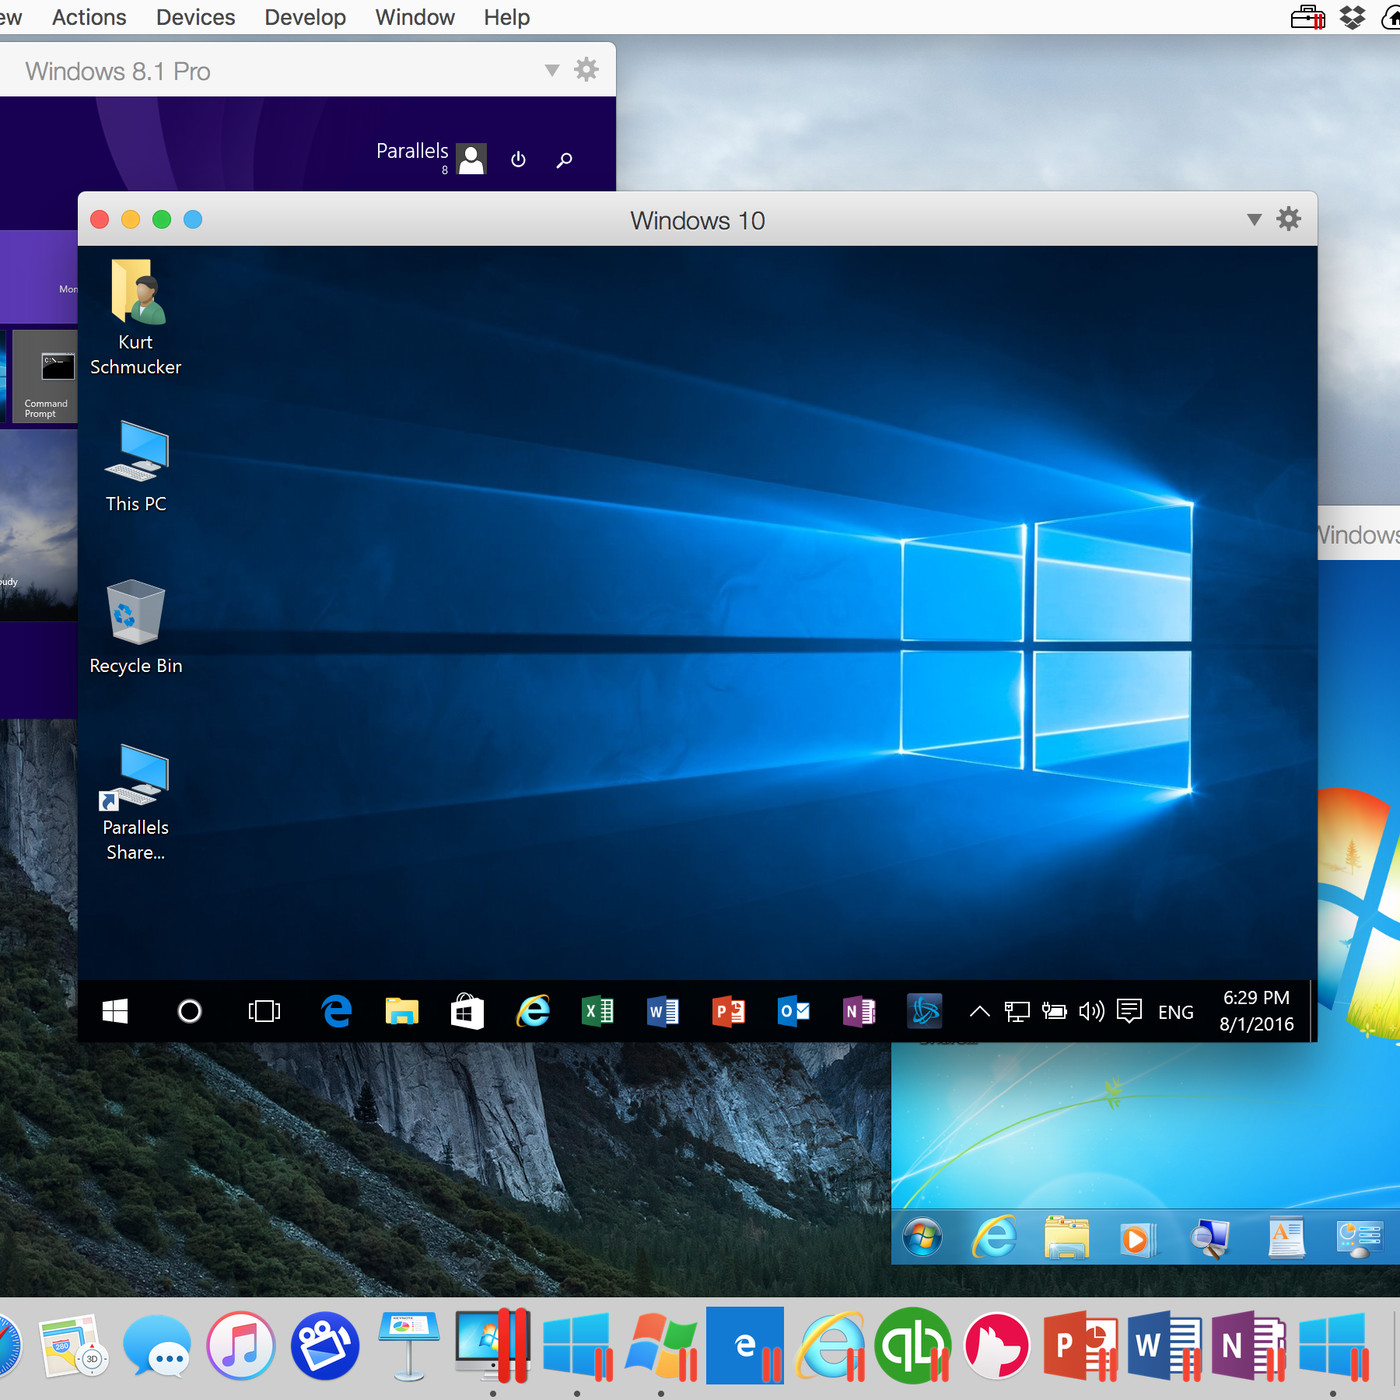 Download dock for windows 10